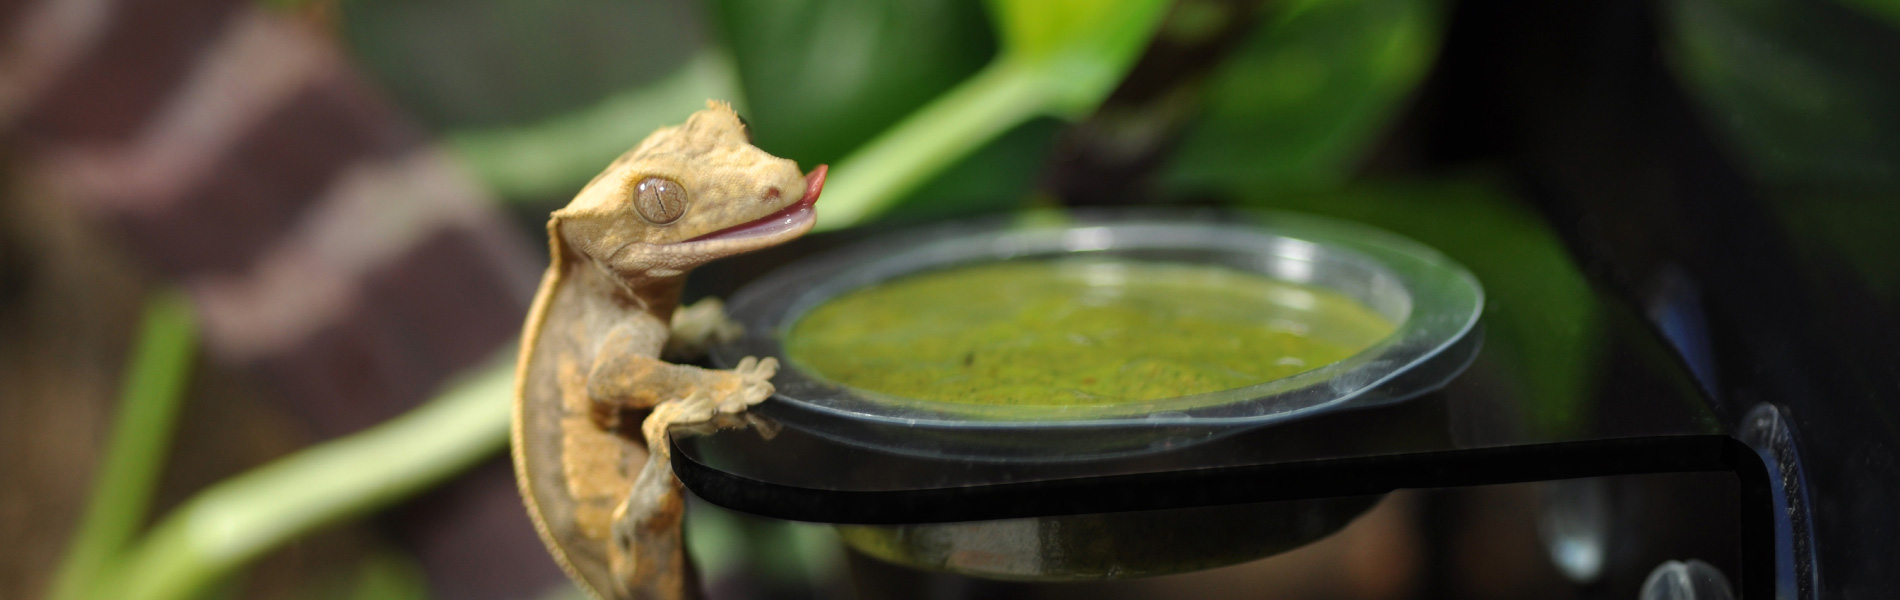 Crested Gecko, Gecko Food, Feeding Ledge